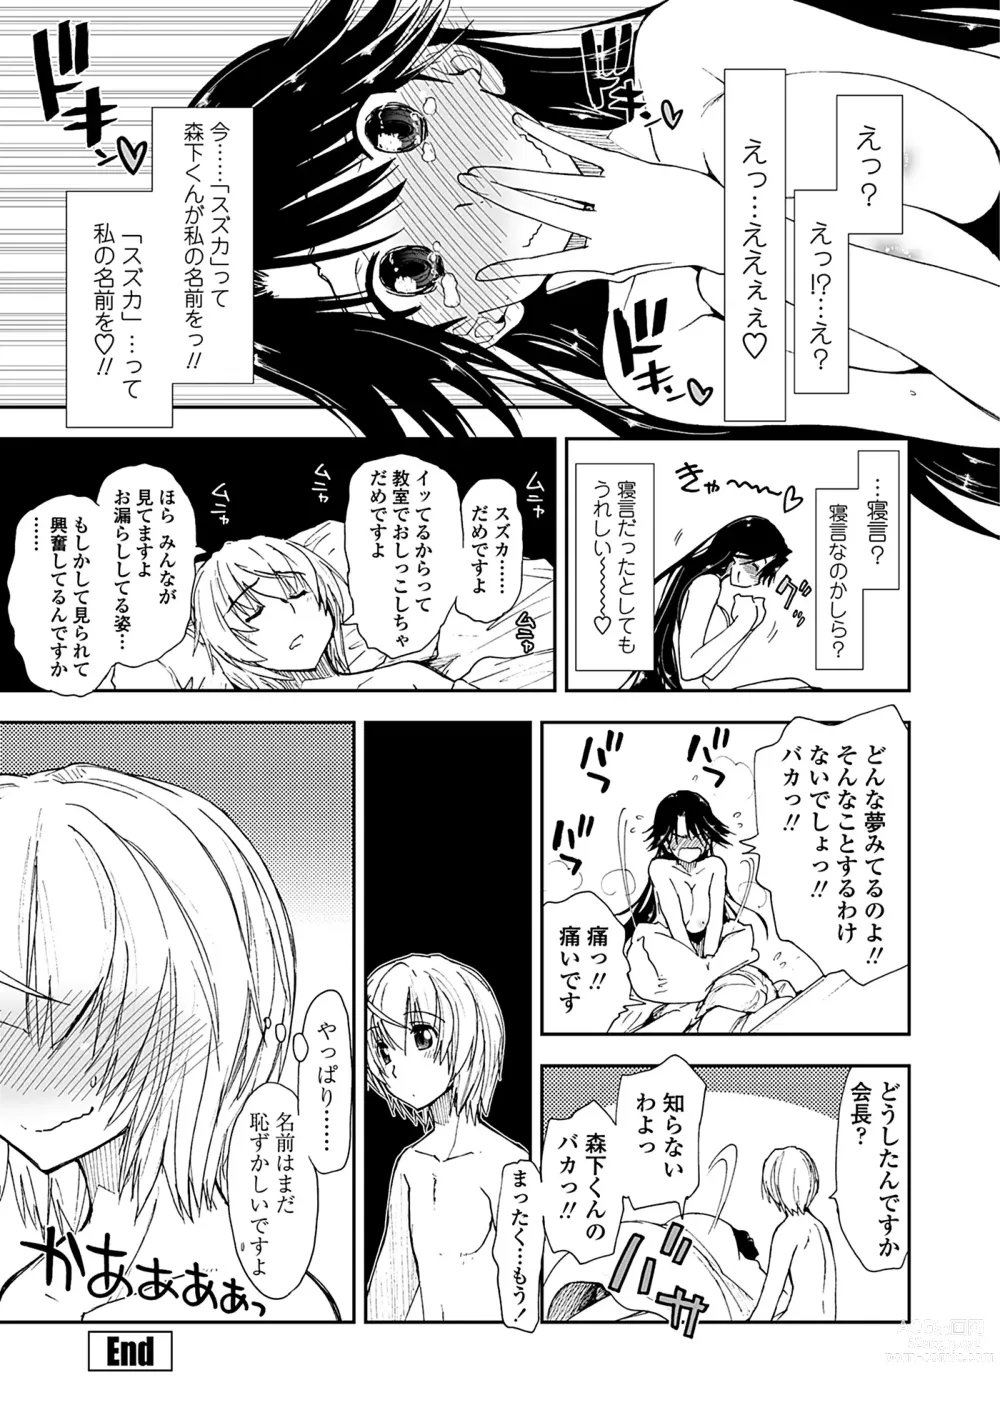 Page 203 of manga Kimochi Ii? x Kimochi Ii - Does it feel good? x Good feeling